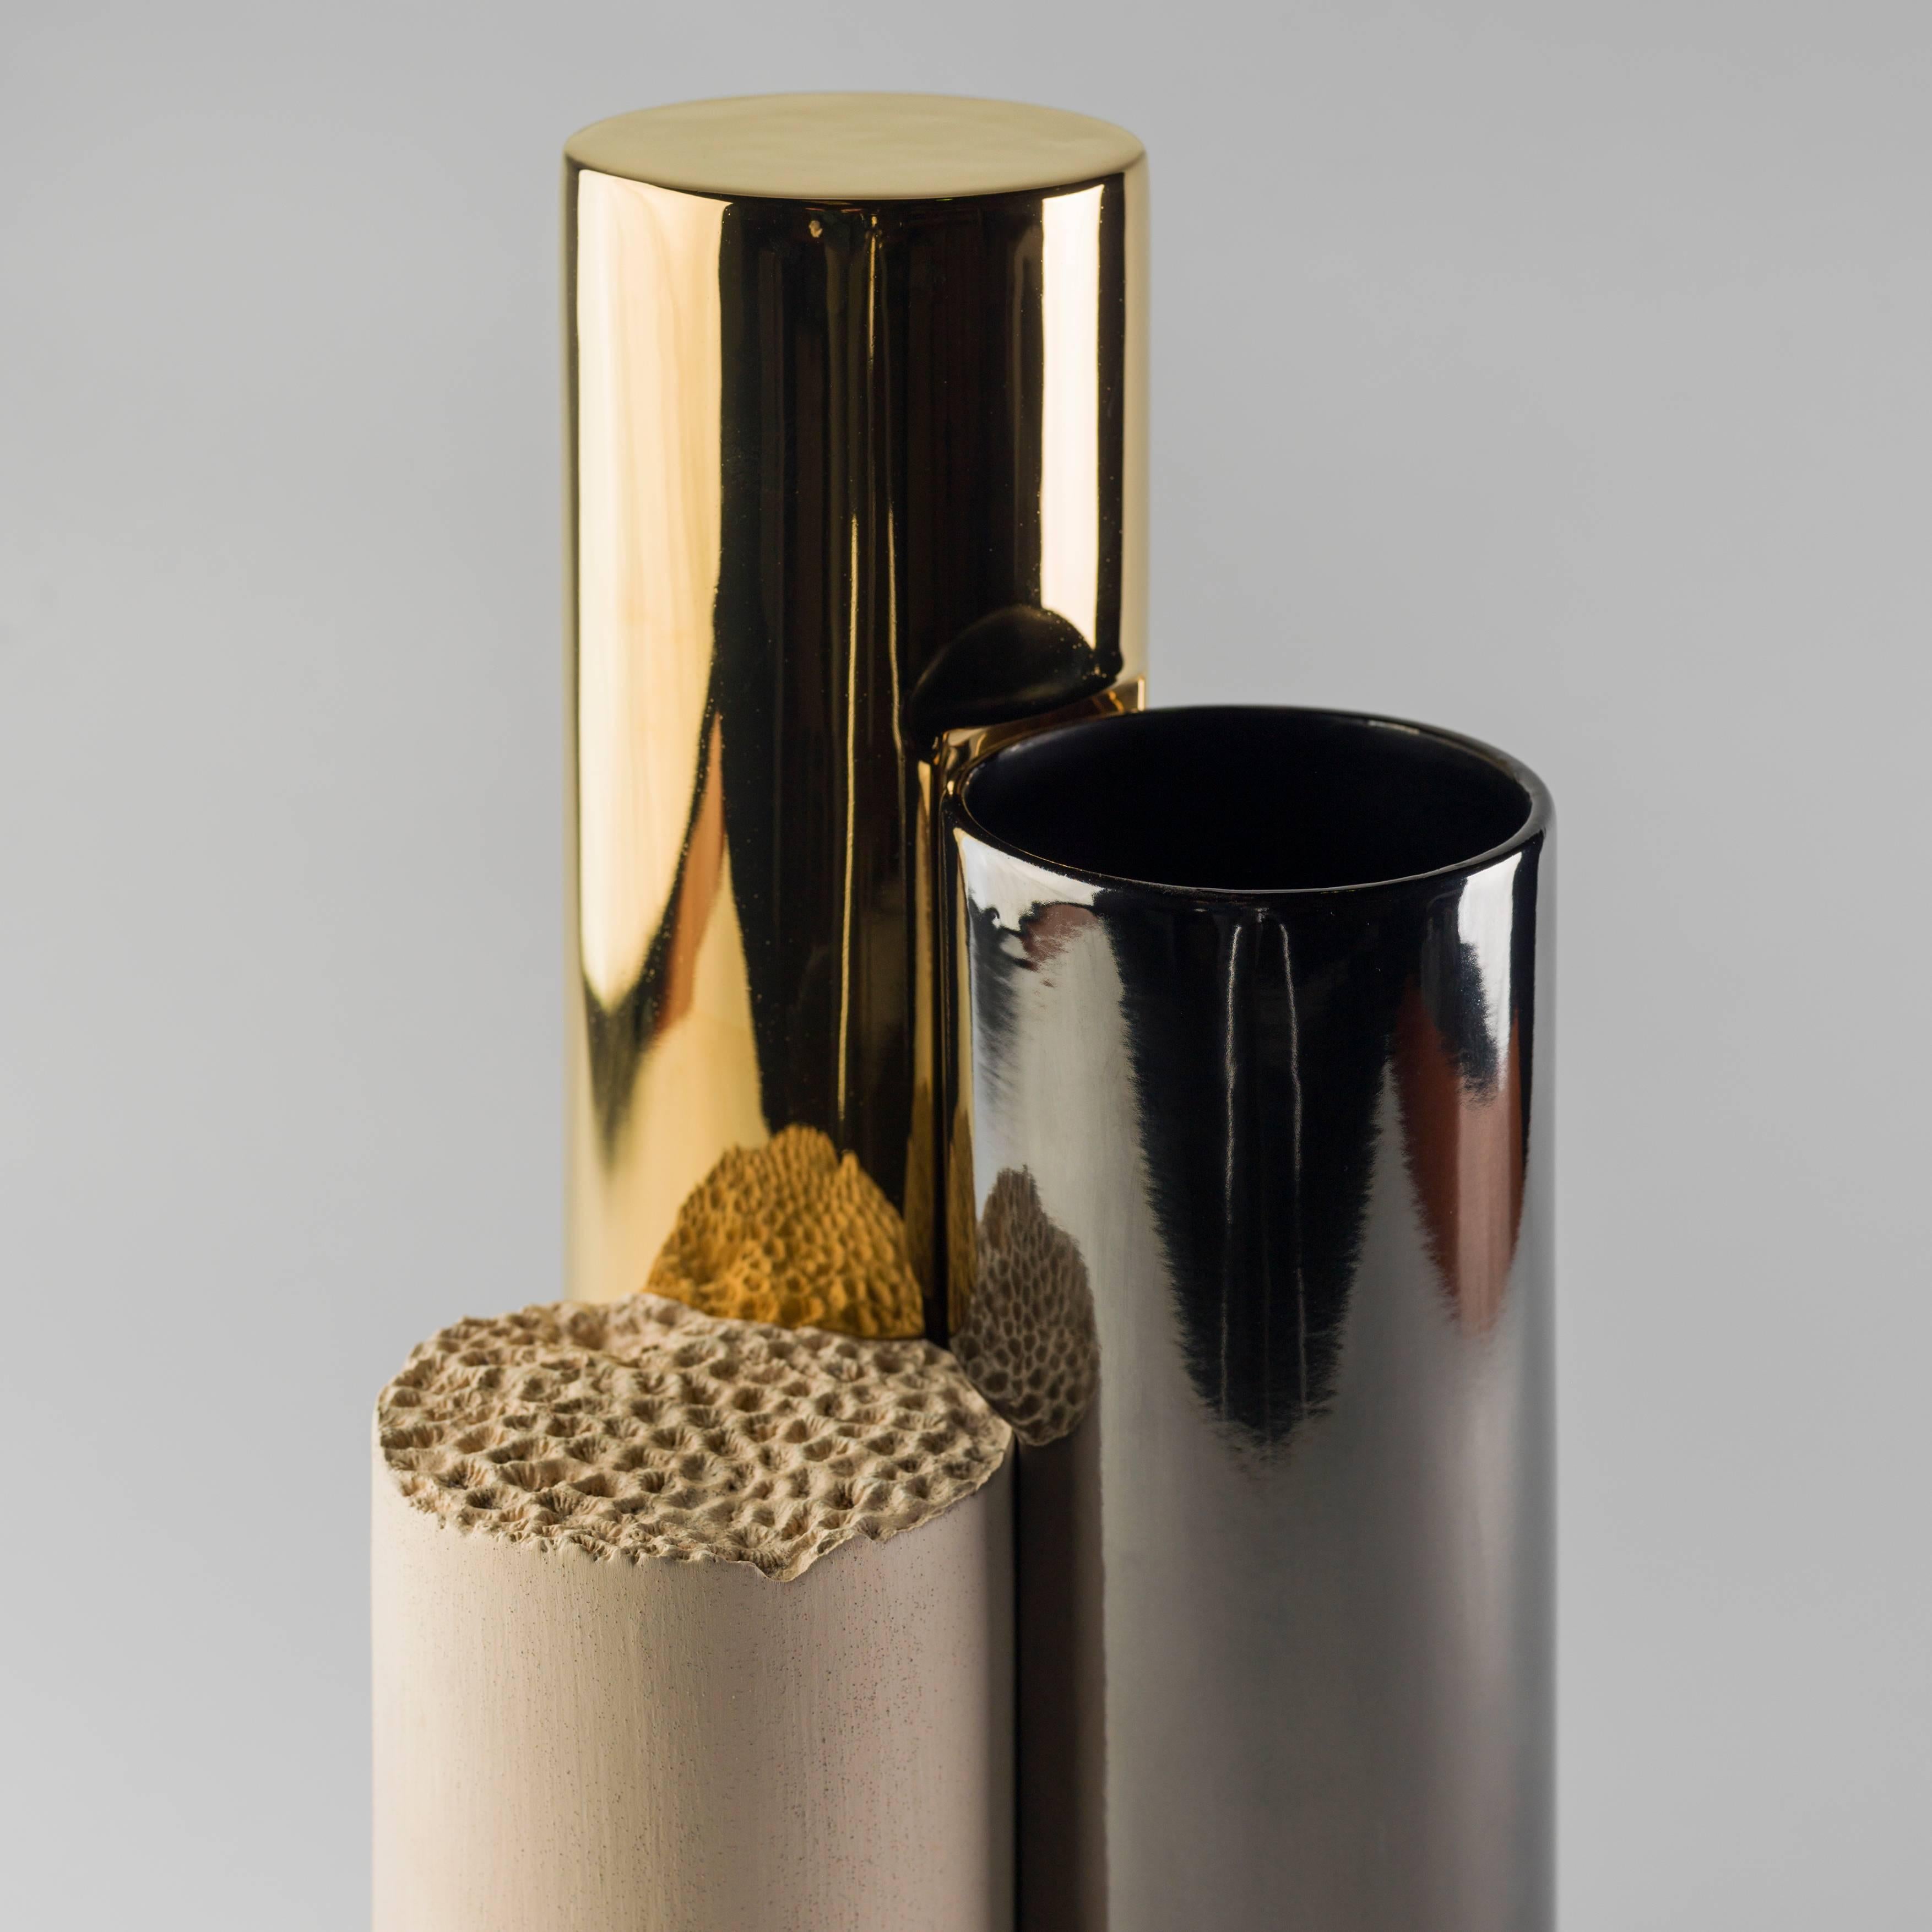 Modern Sheikha Hind Bint Majid Al Qassimi Limited Edition Is-Dher Vases